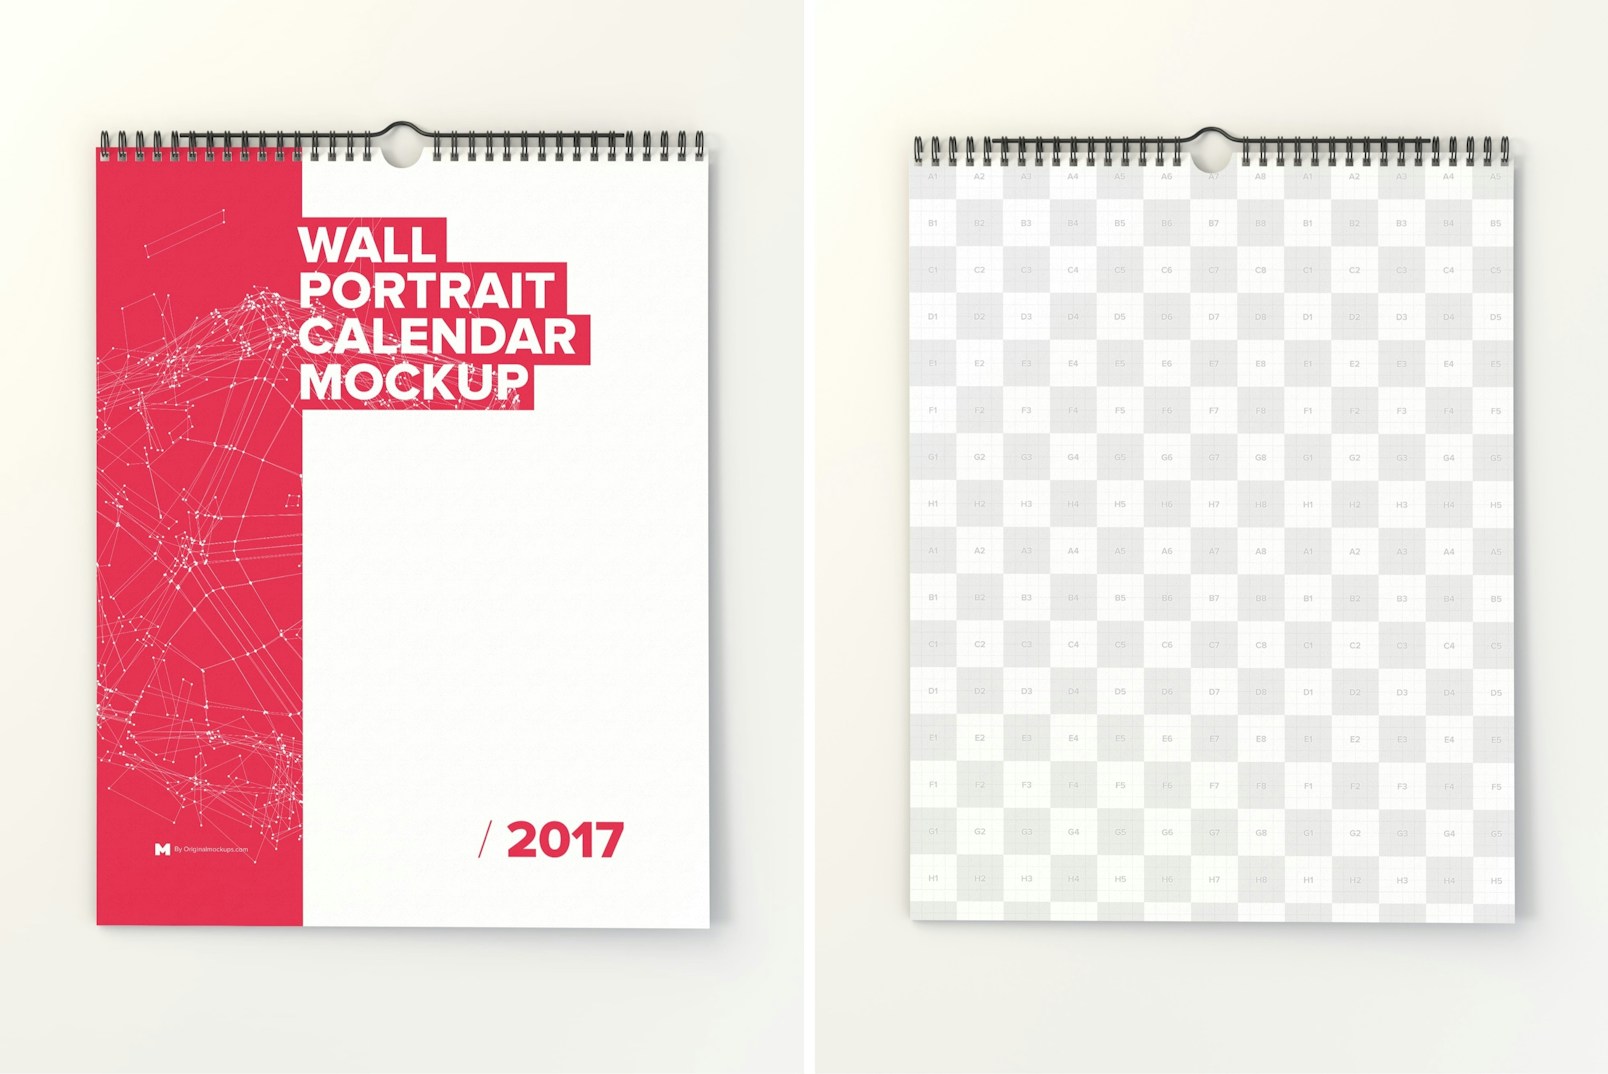 Wall Portrait Calendar Mockup